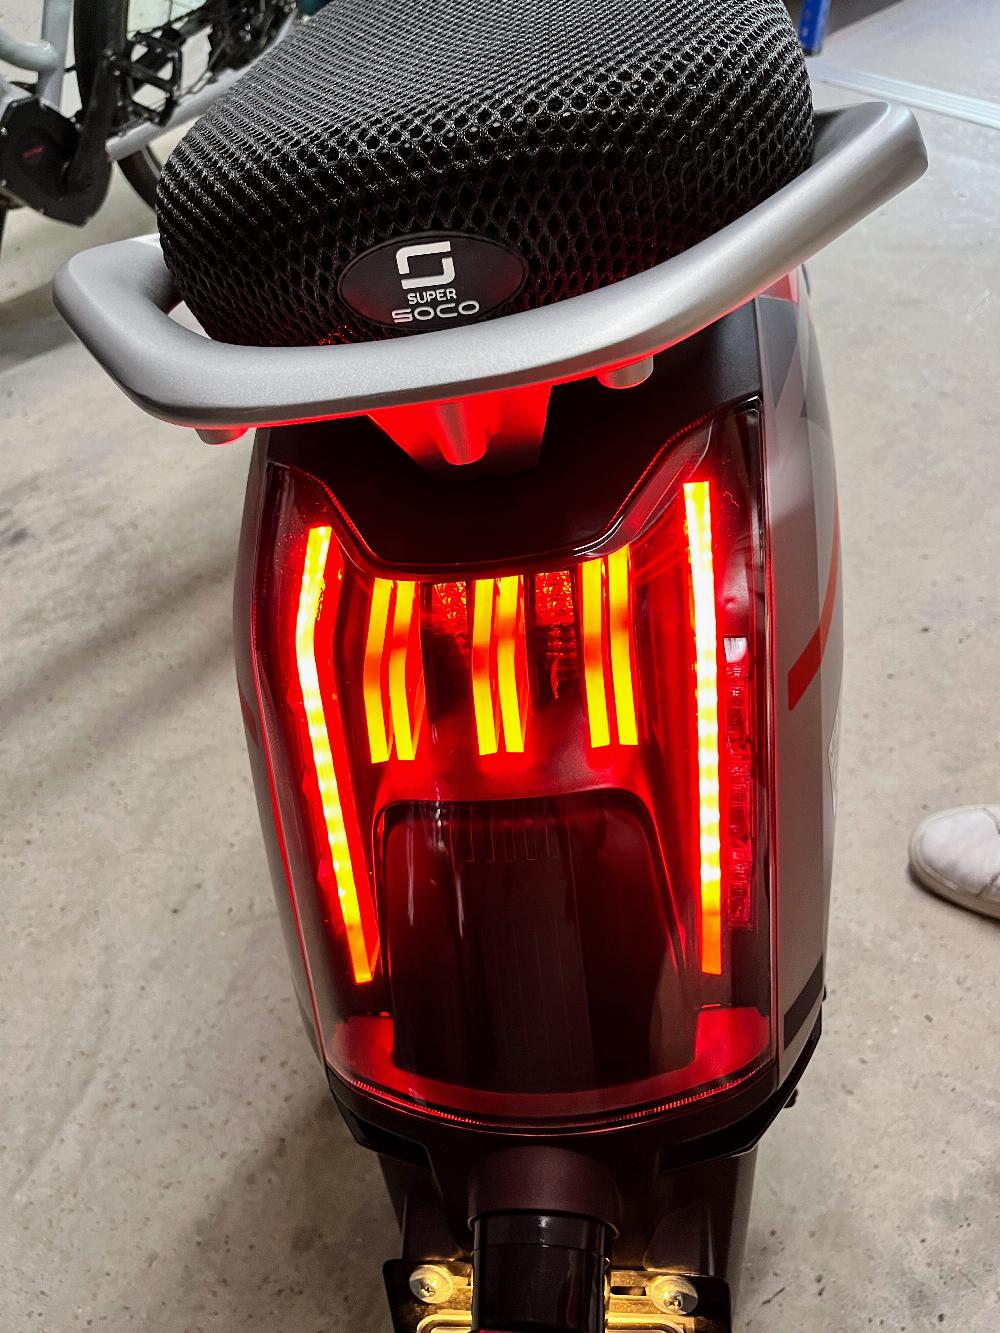 Motorrad verkaufen Andere Super Soco CUX Ducati Edition Ankauf